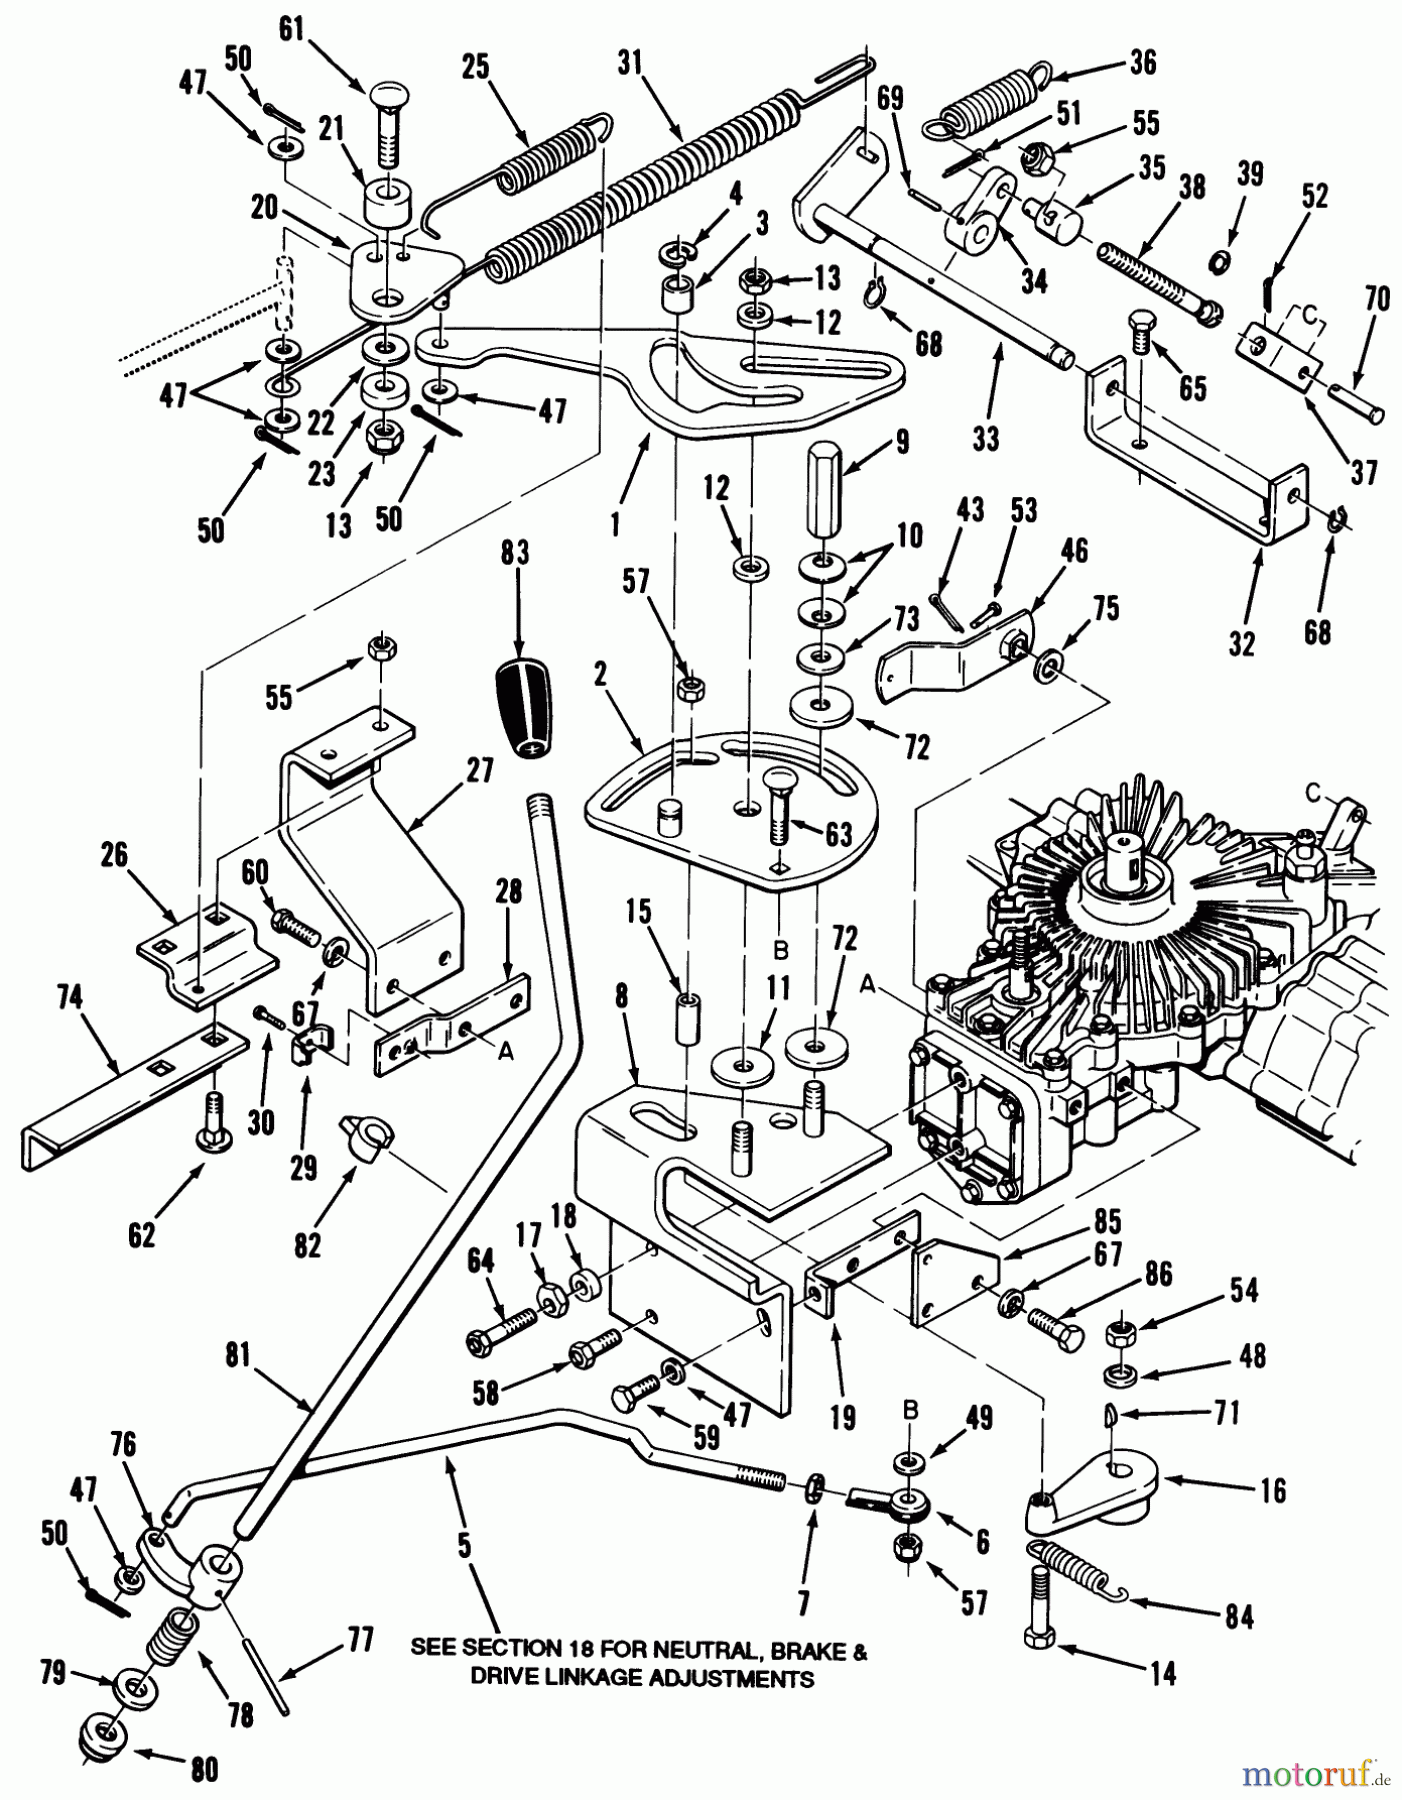  Toro Neu Mowers, Lawn & Garden Tractor Seite 1 32-16BE01 (216-H) - Toro 216-H Tractor, 1990 HYDROSTATIC TRANSAXLE - CONTROL LINKAGE